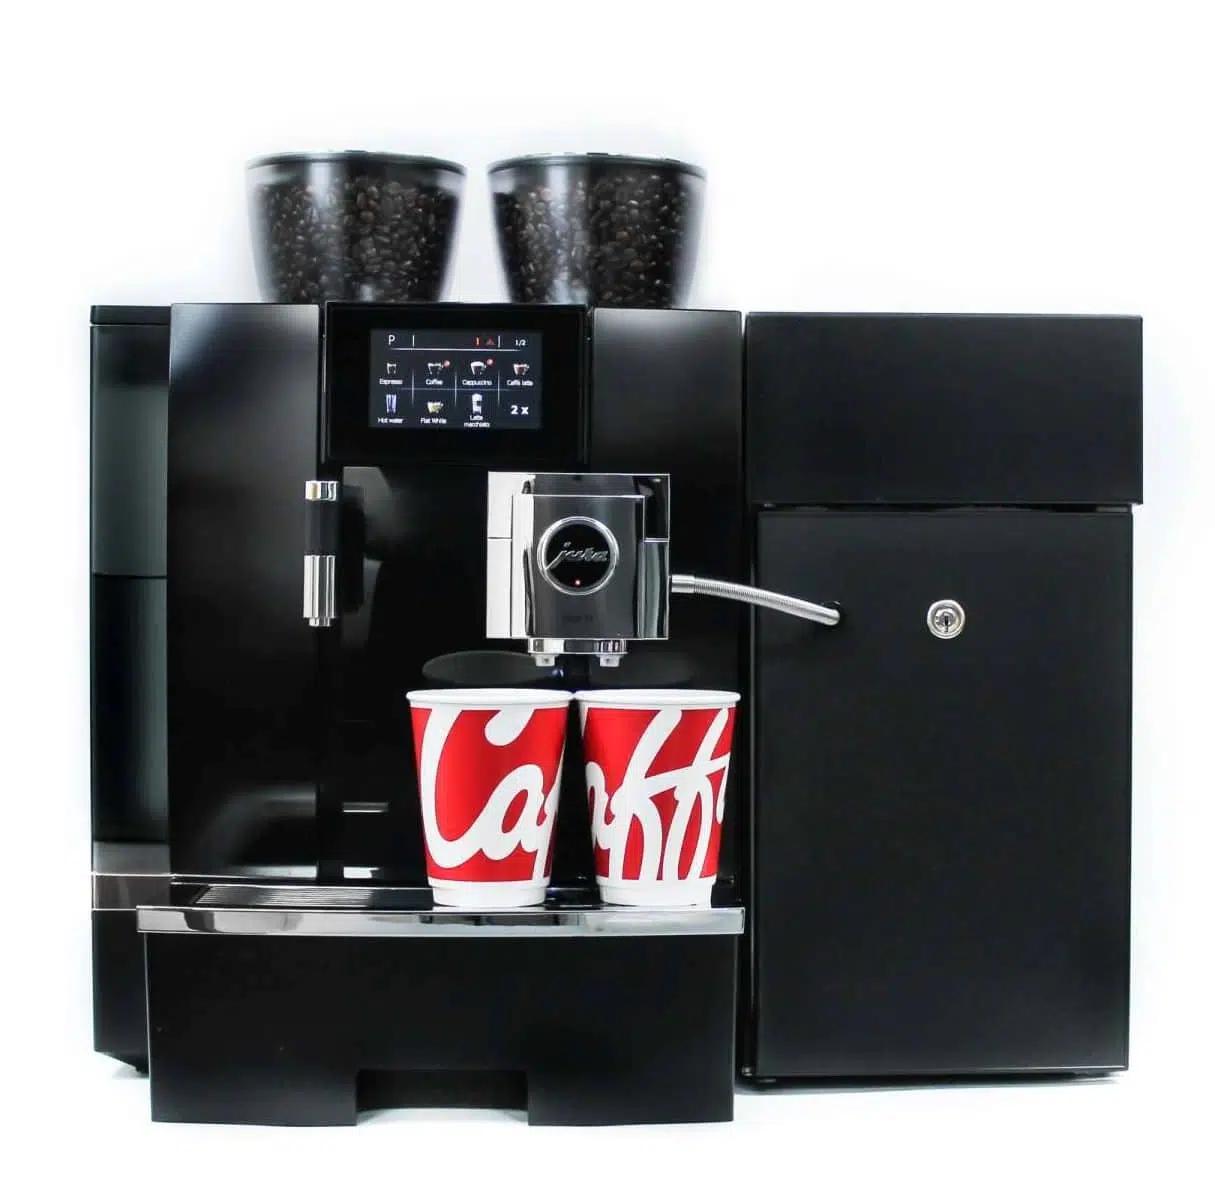 Product Jura Giga X8 Coffee Machine With 4 Litre Milk Fridge image